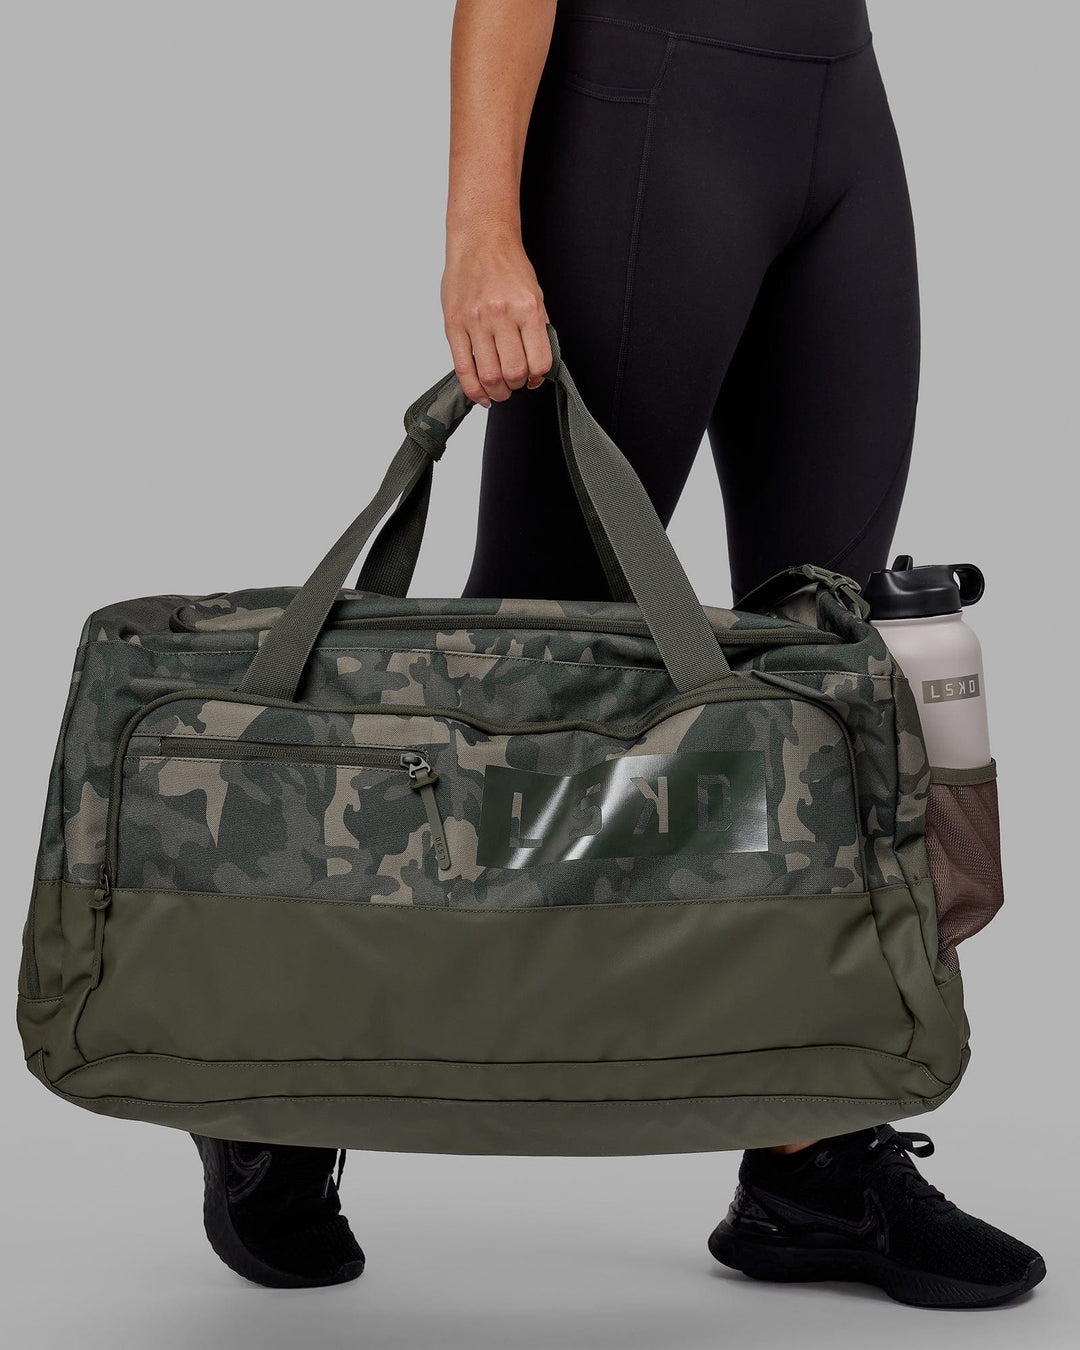 Rep Duffle Bag Large - Dark Olive Camo